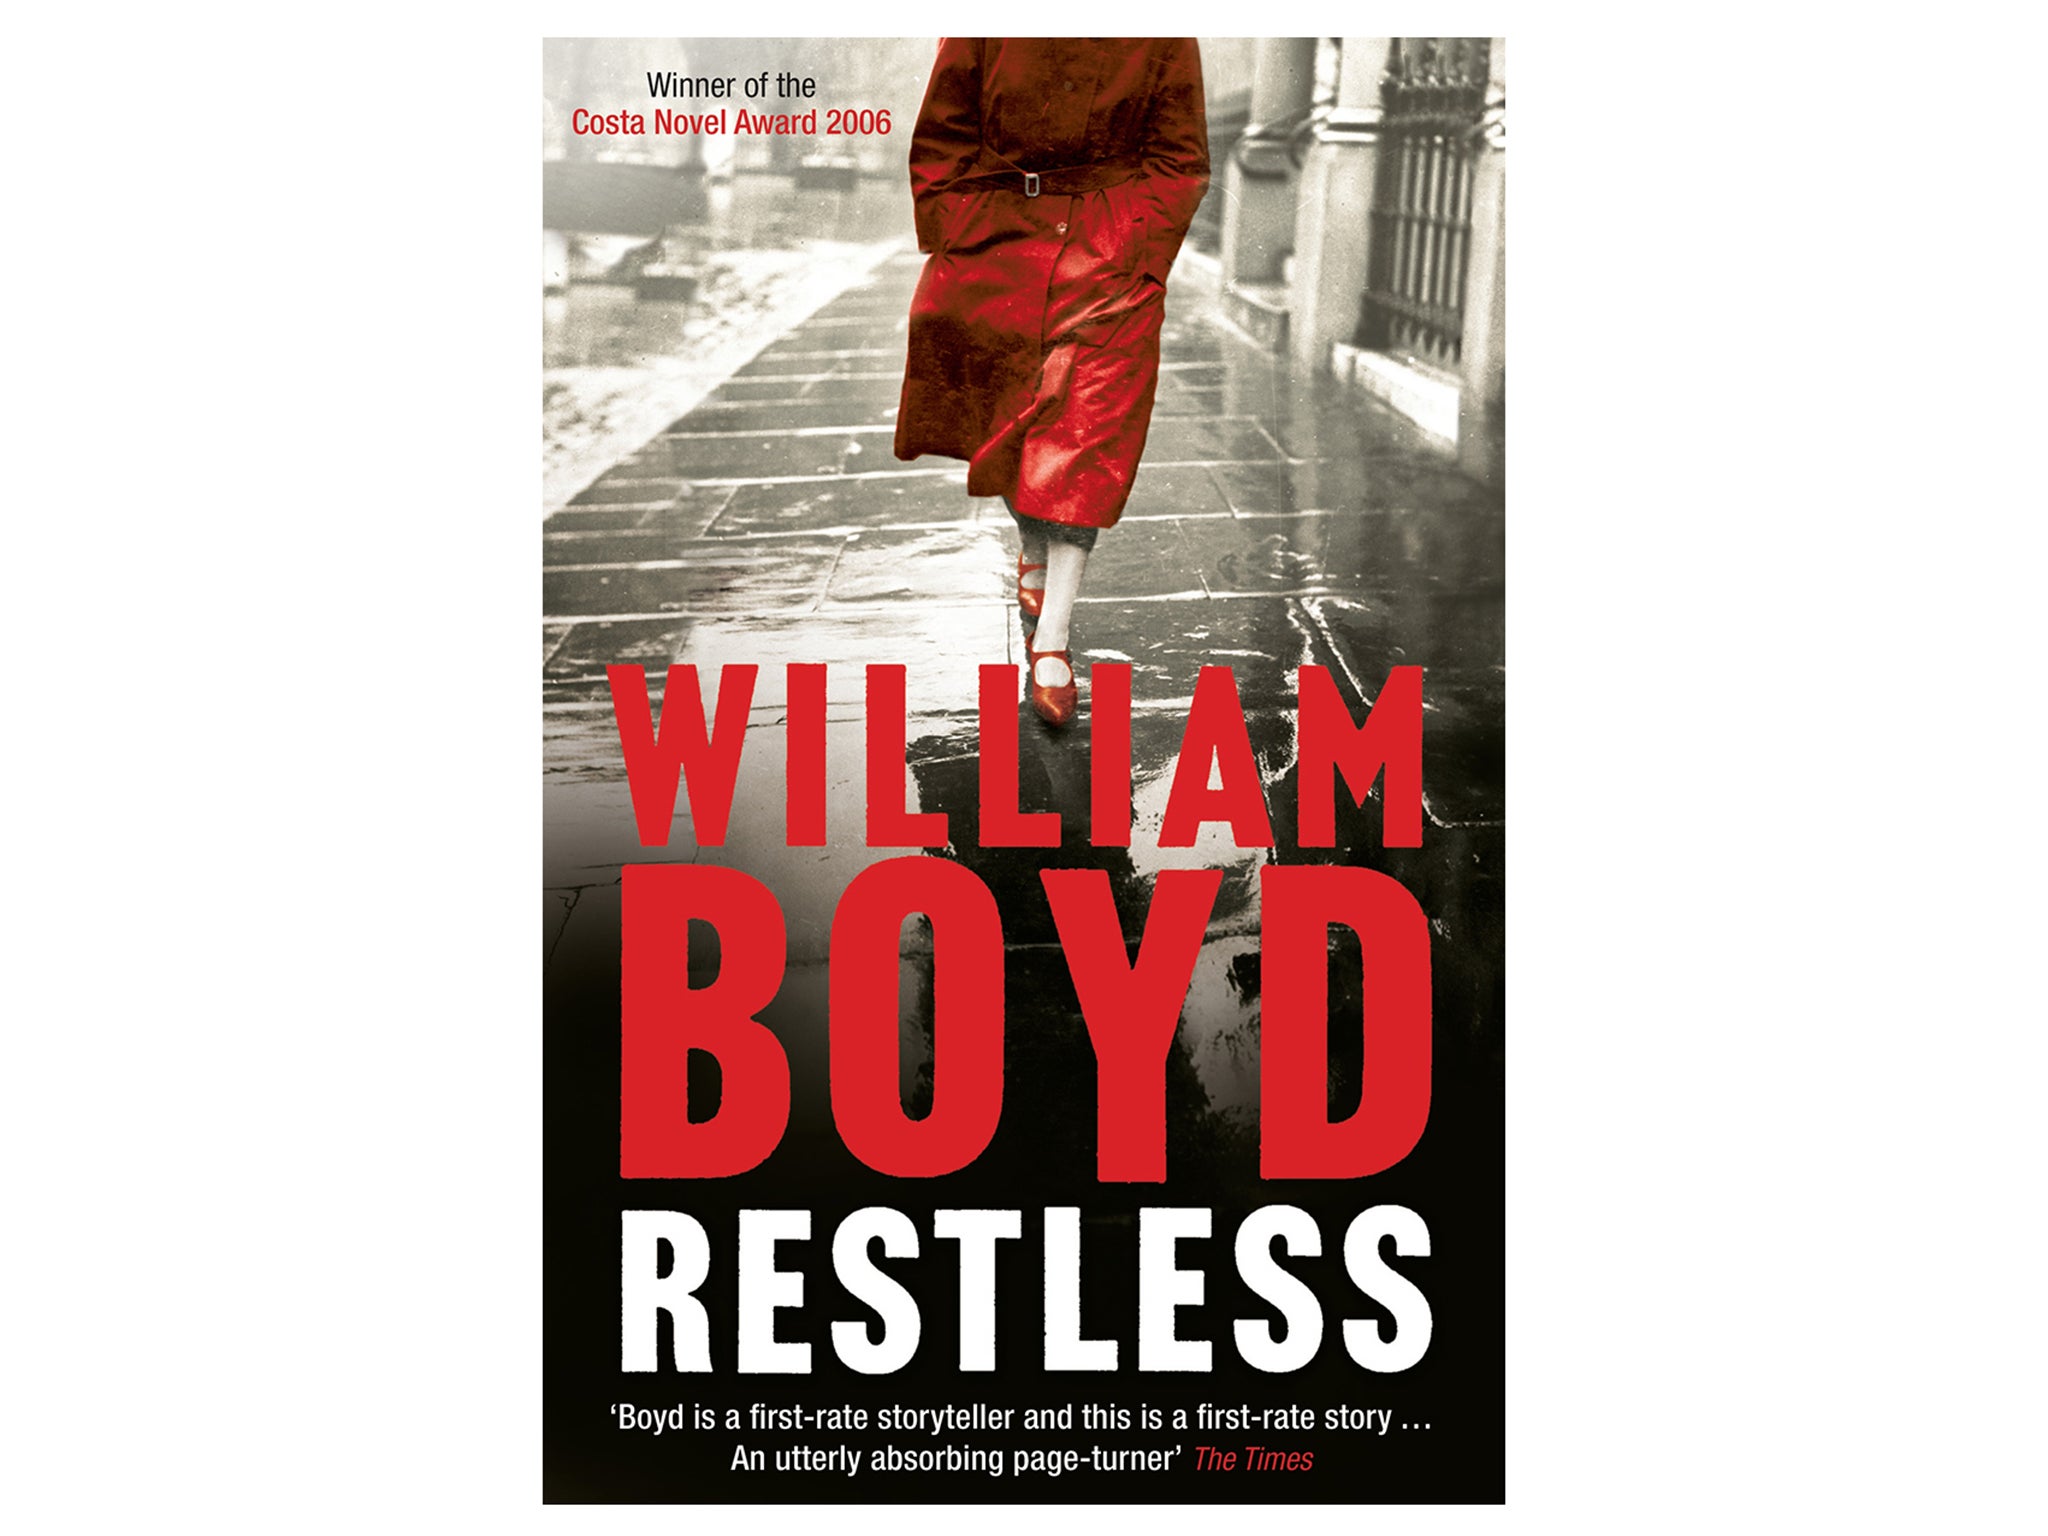 restless-william-boyd-indybest-book-club-duchess-of-cornwall.jpg